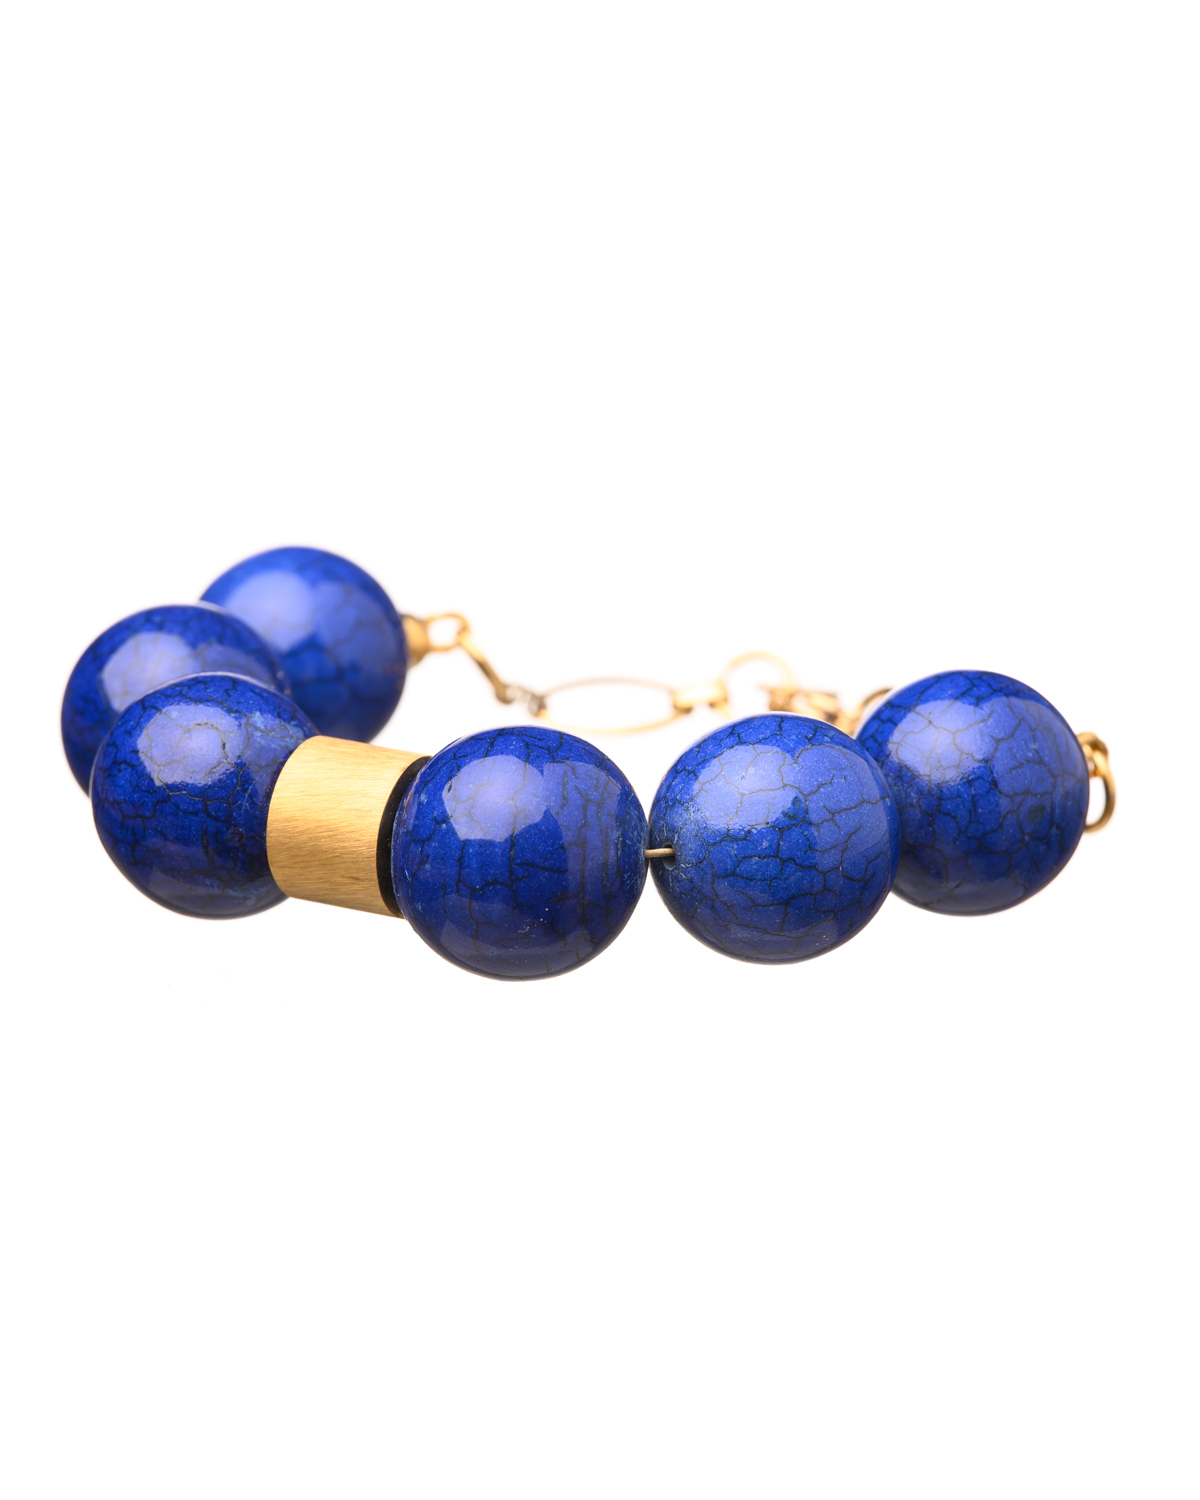 Dynamic Agate Bracelet - Blue